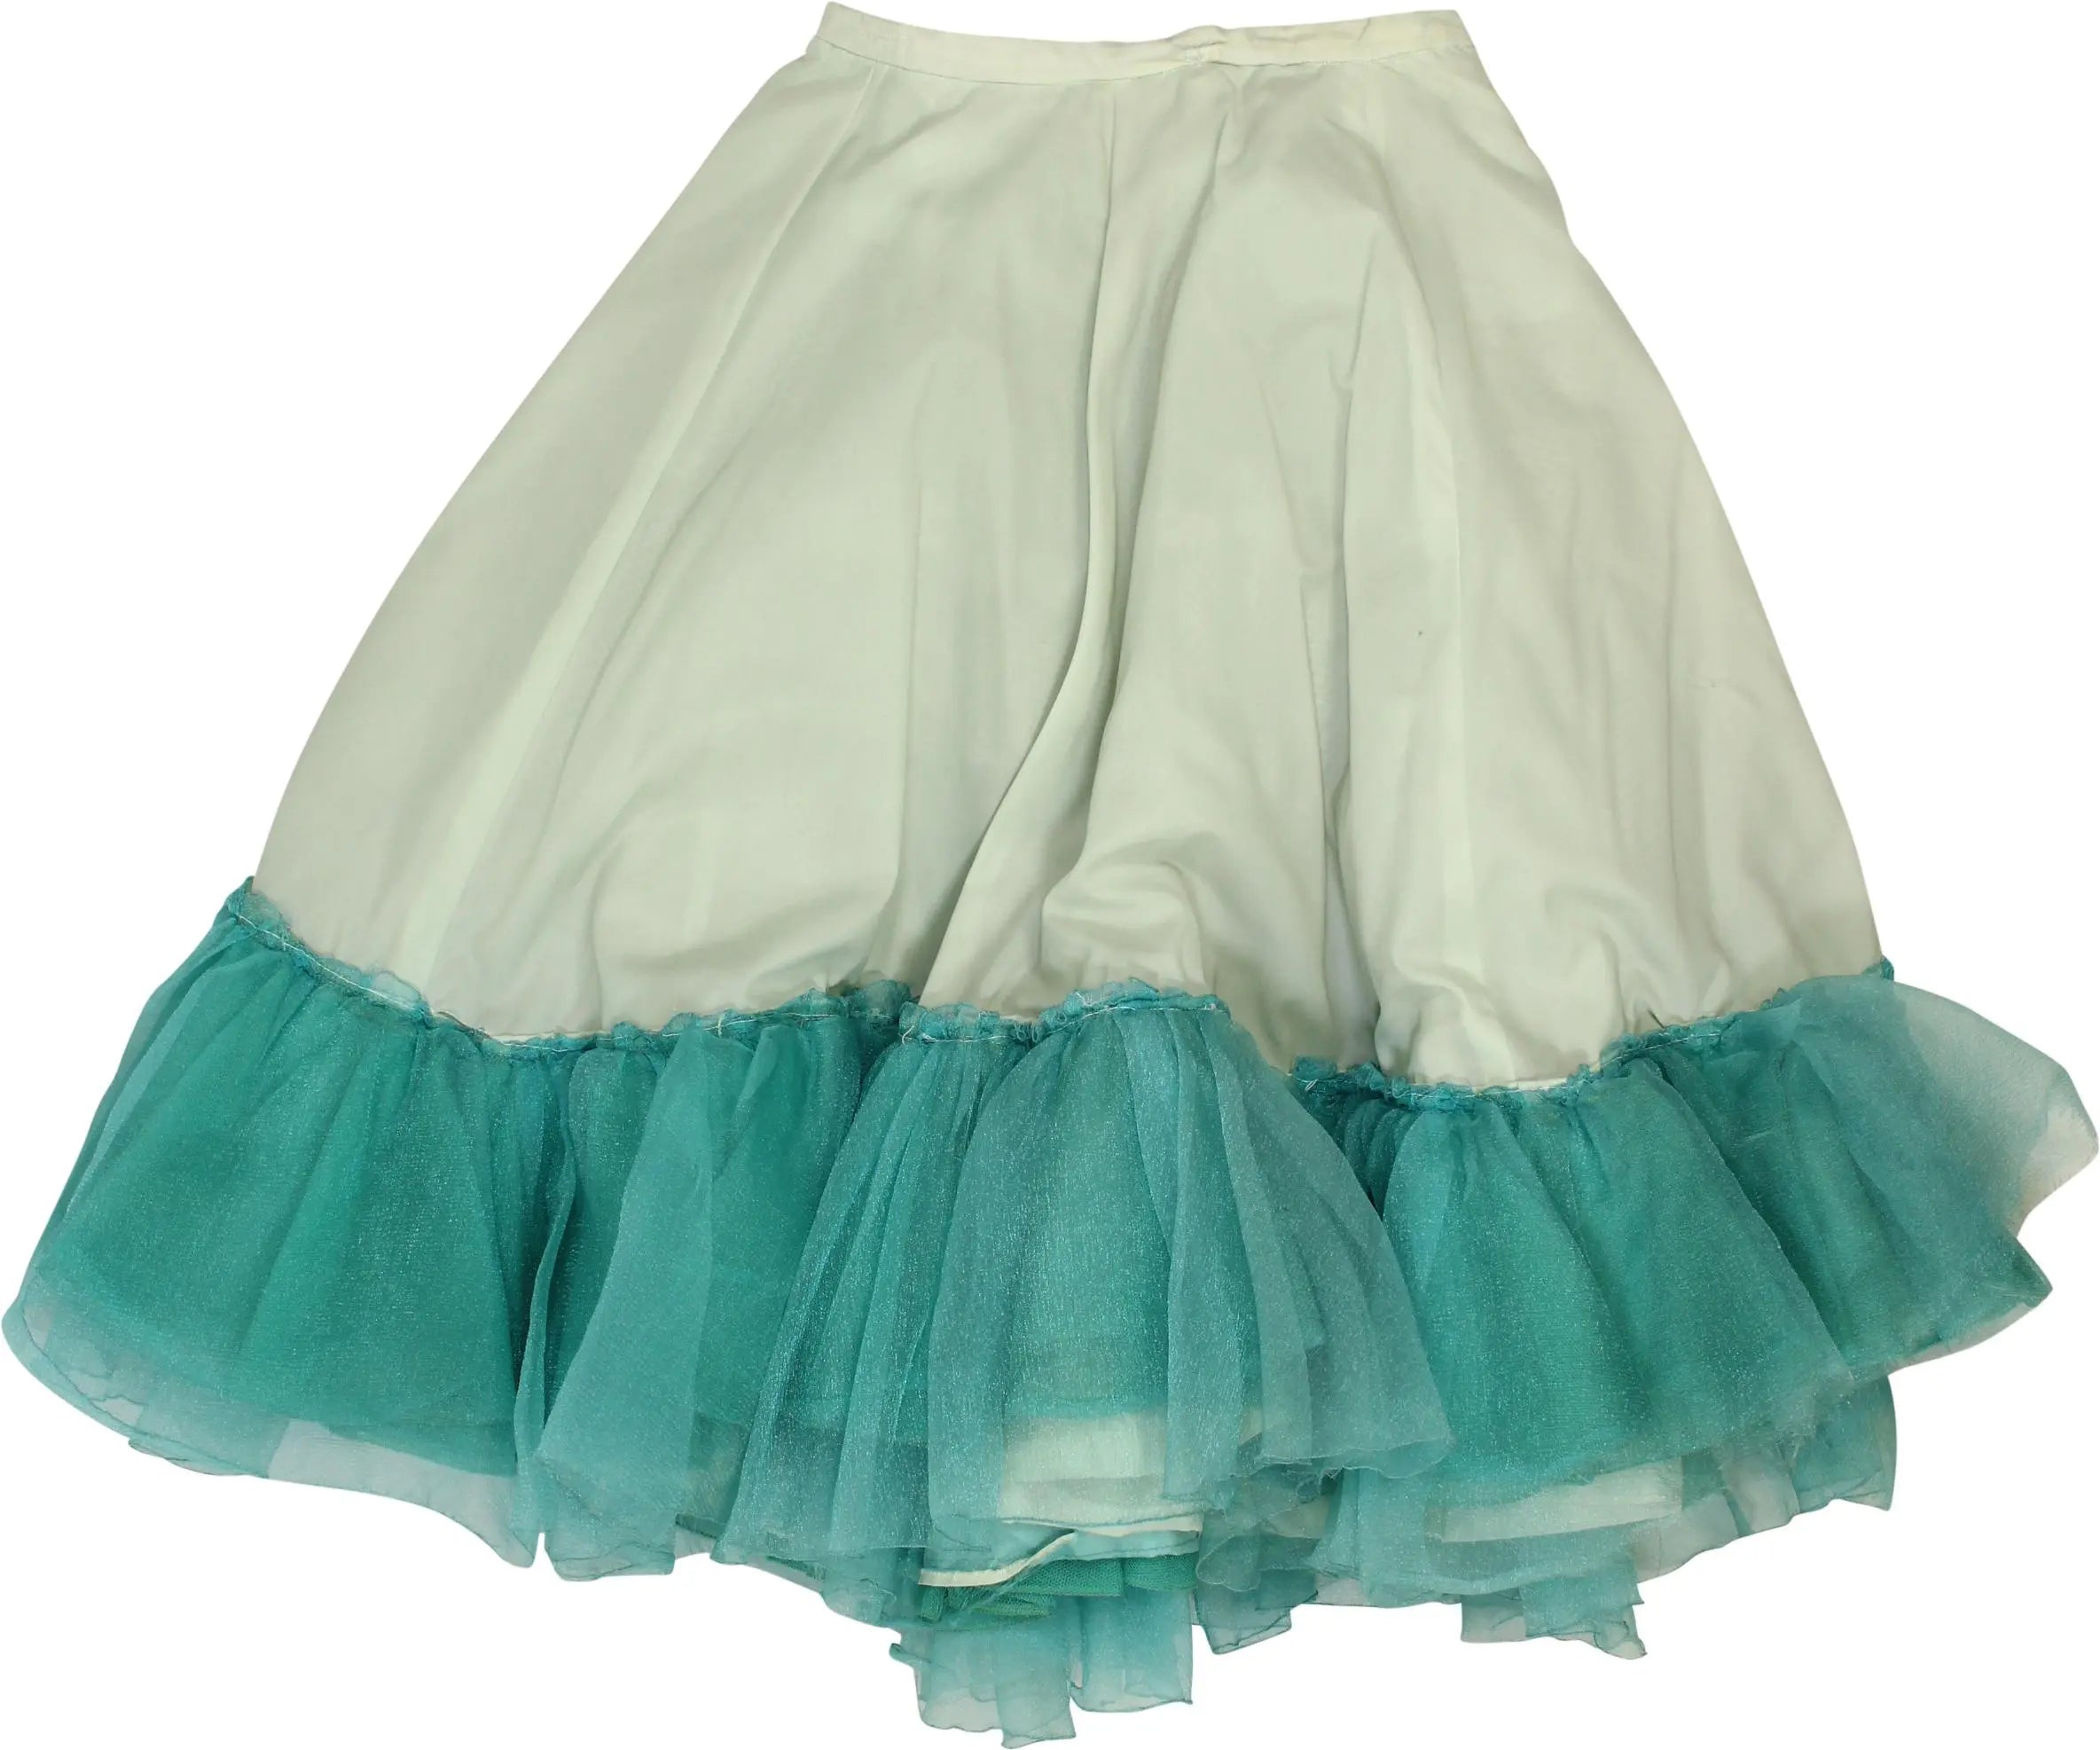 Handmade - Handmade Petticoat- ThriftTale.com - Vintage and second handclothing